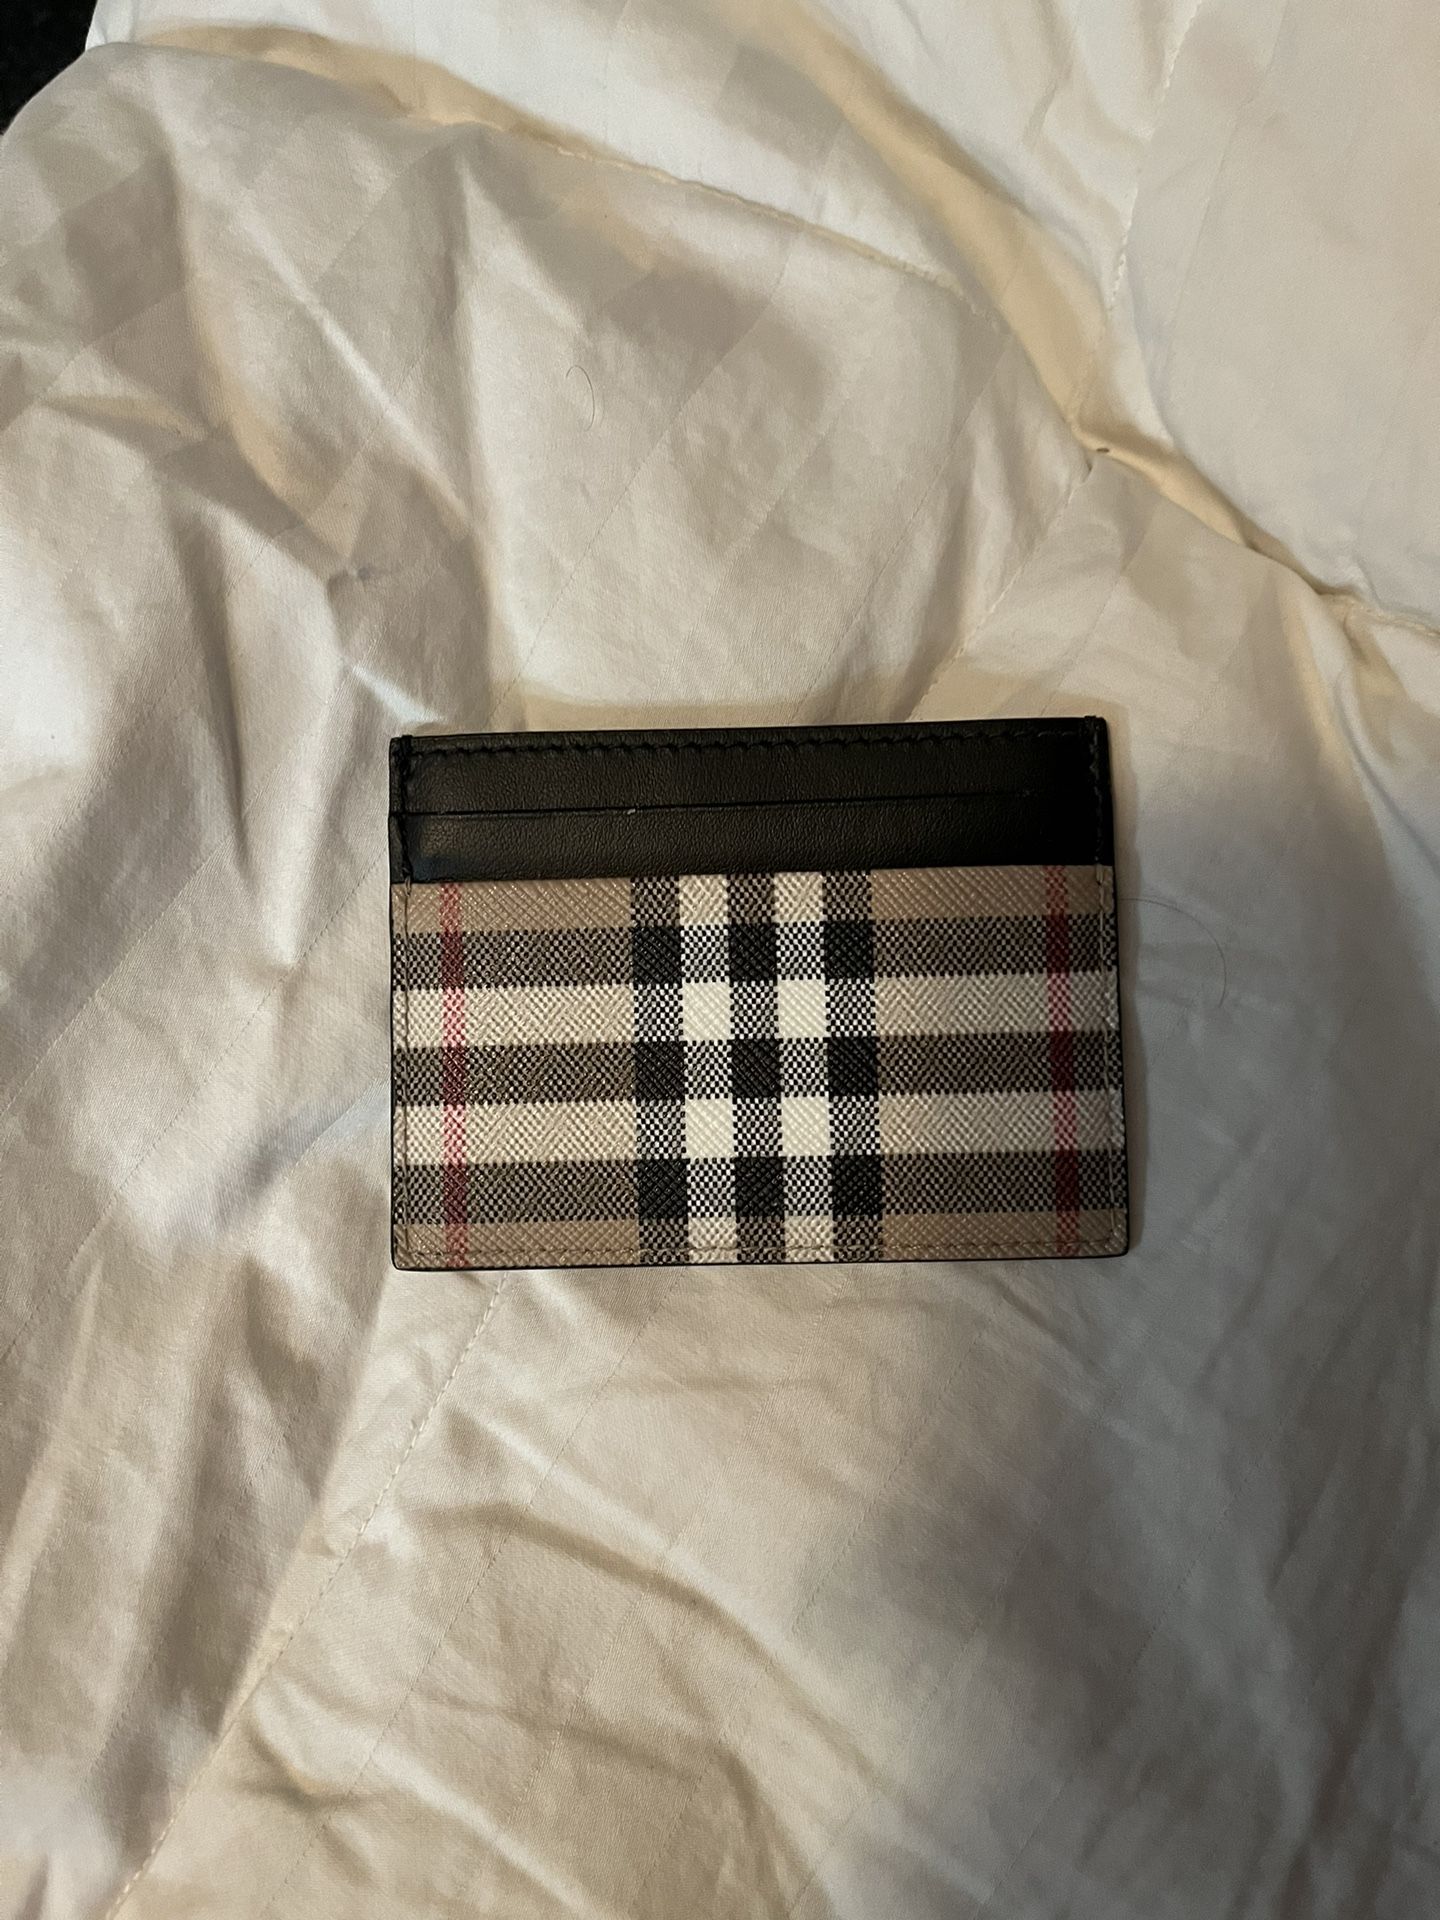 Burberry Sandon Check E-Canvas & Leather Card Case